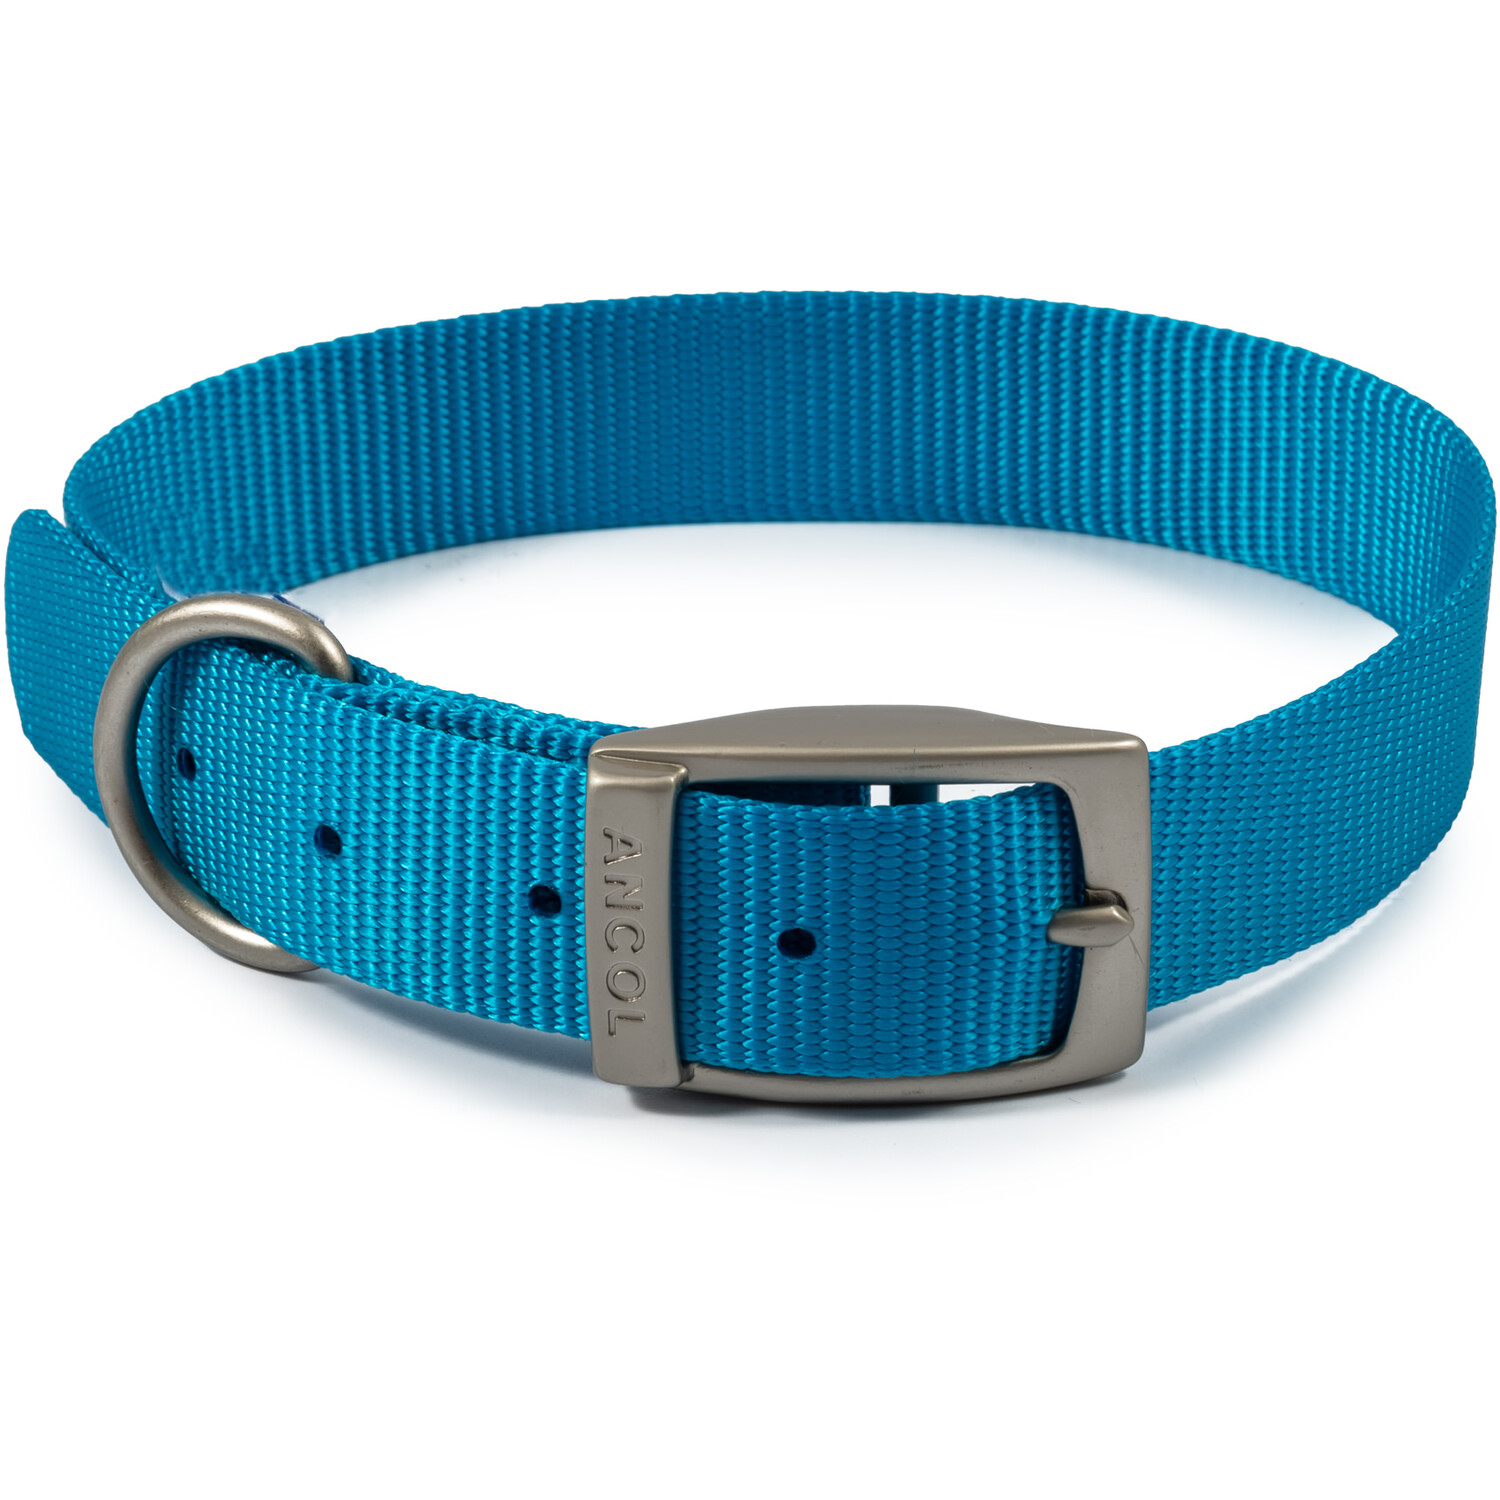 Viva Dog Collar - Blue / 28 - 36cm Neck Image